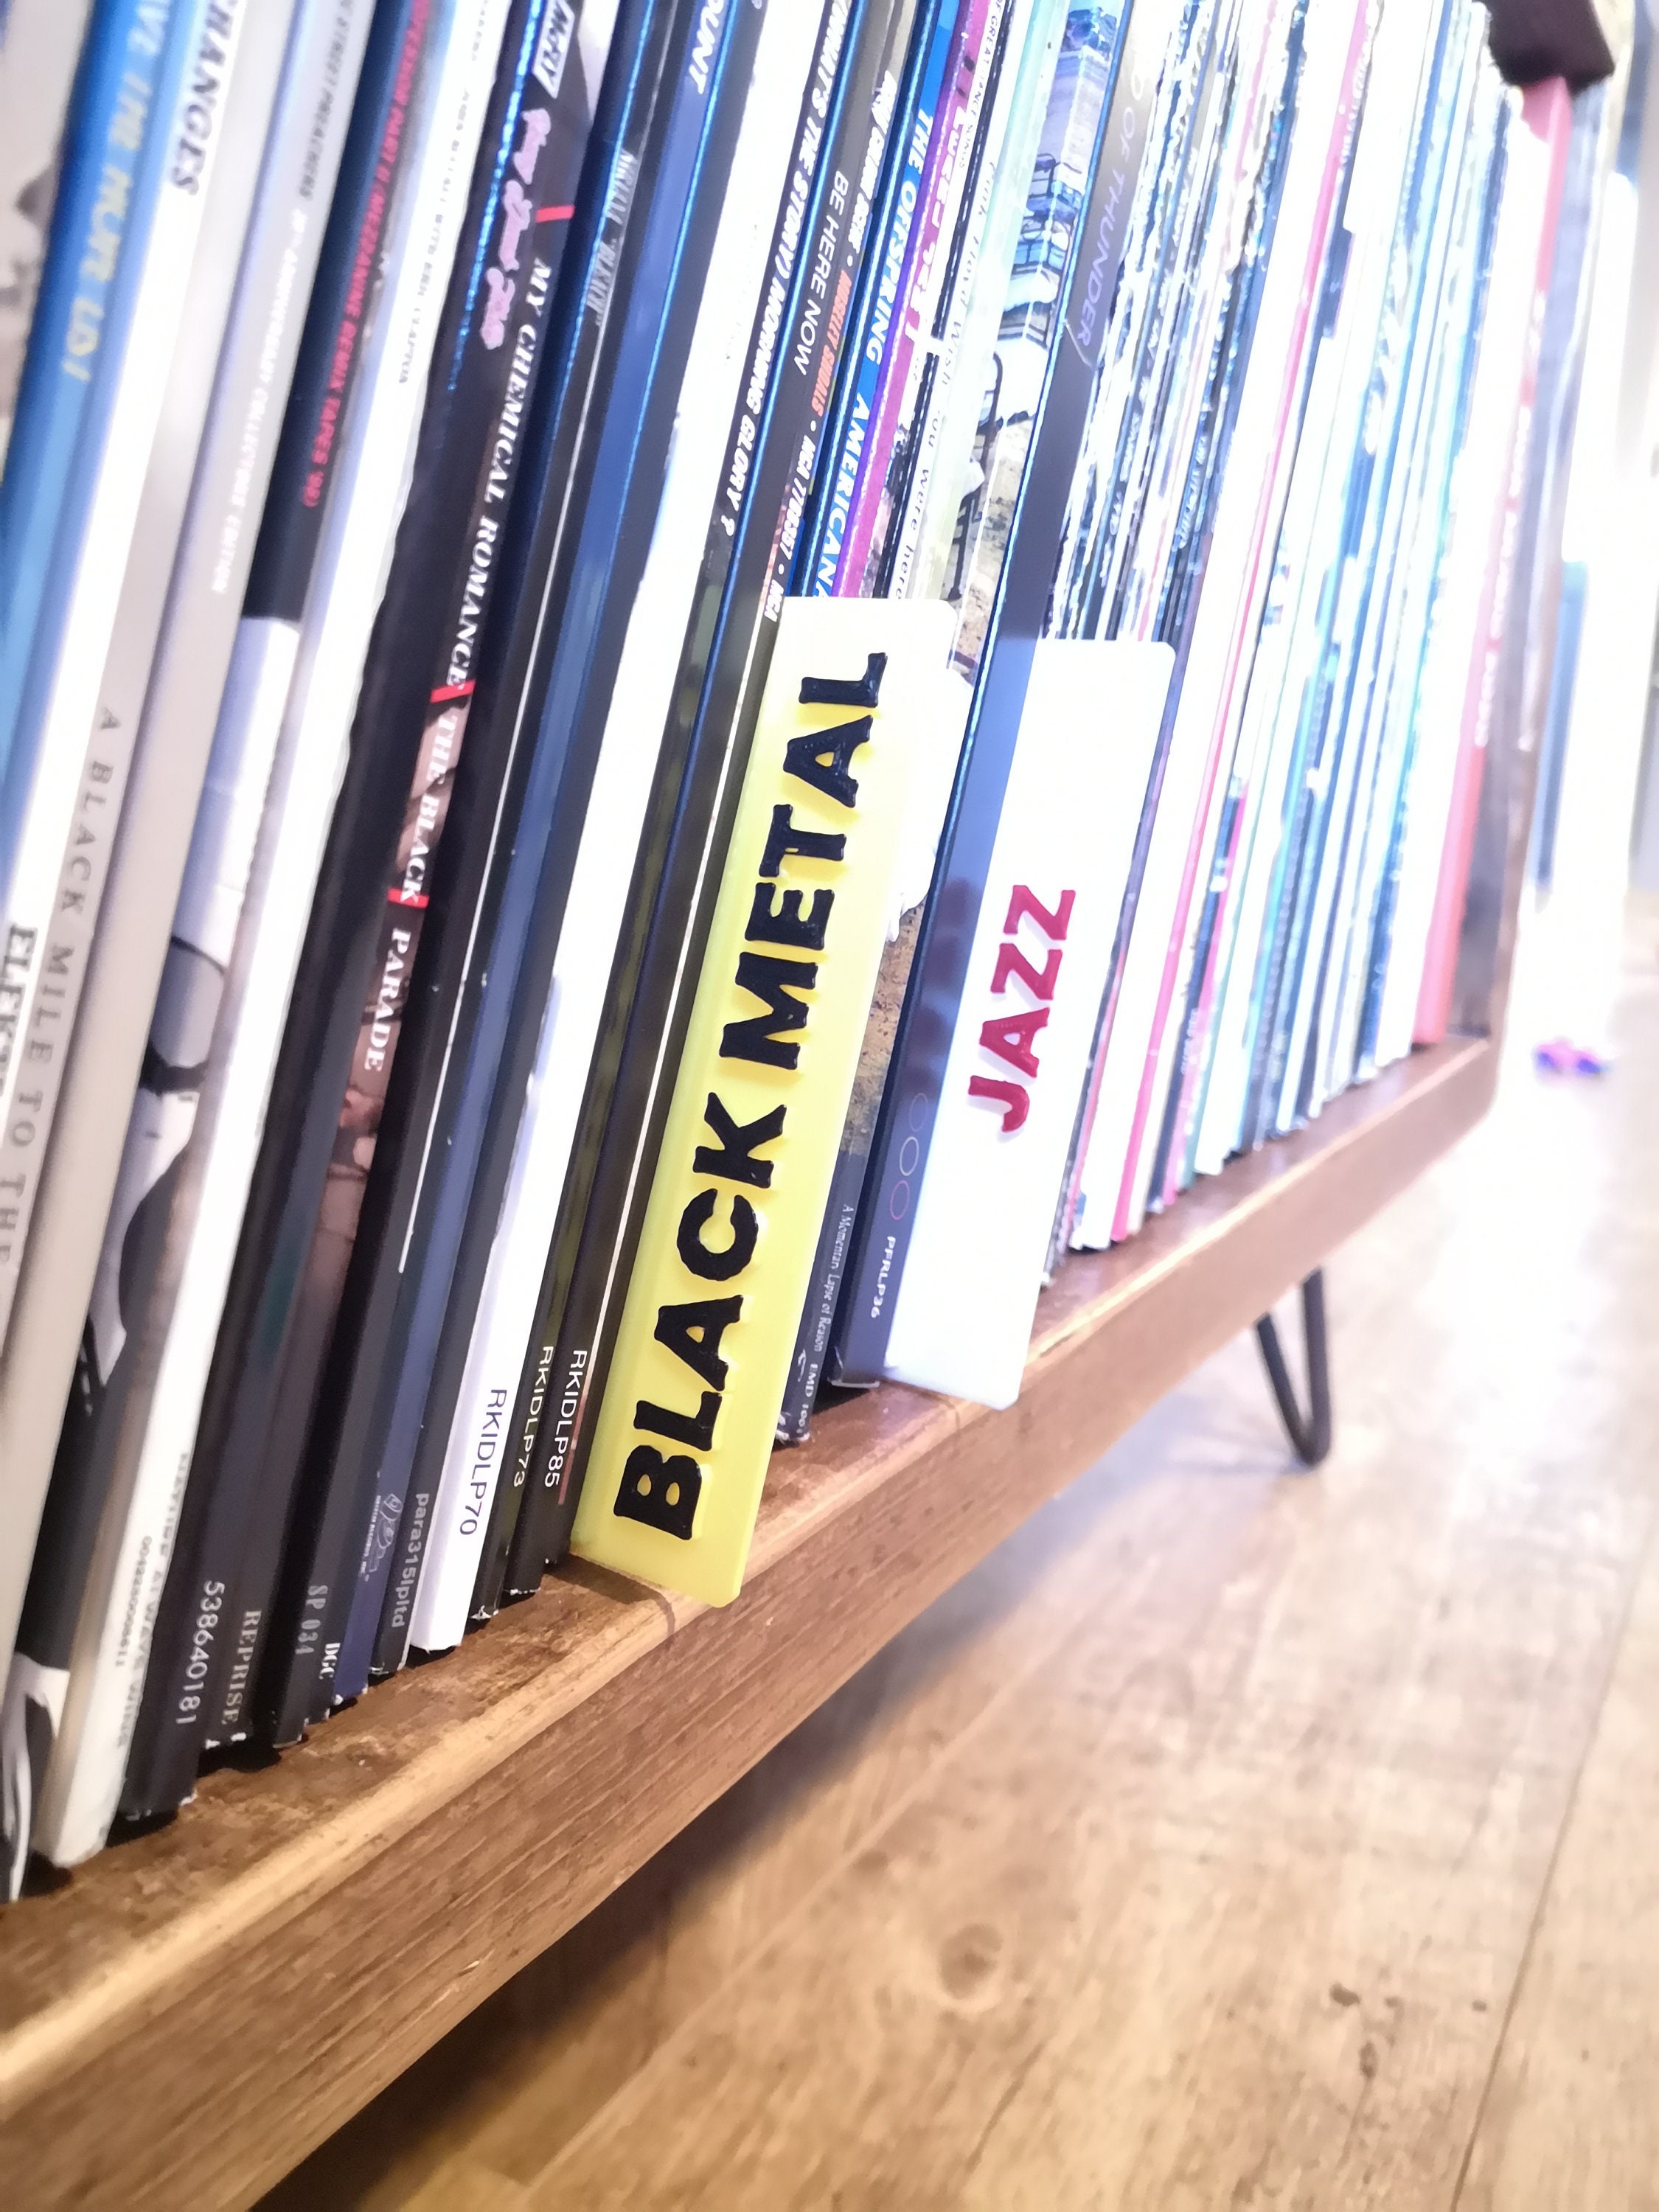 Genre Dividers for Vinyl Records, Cds, Books 